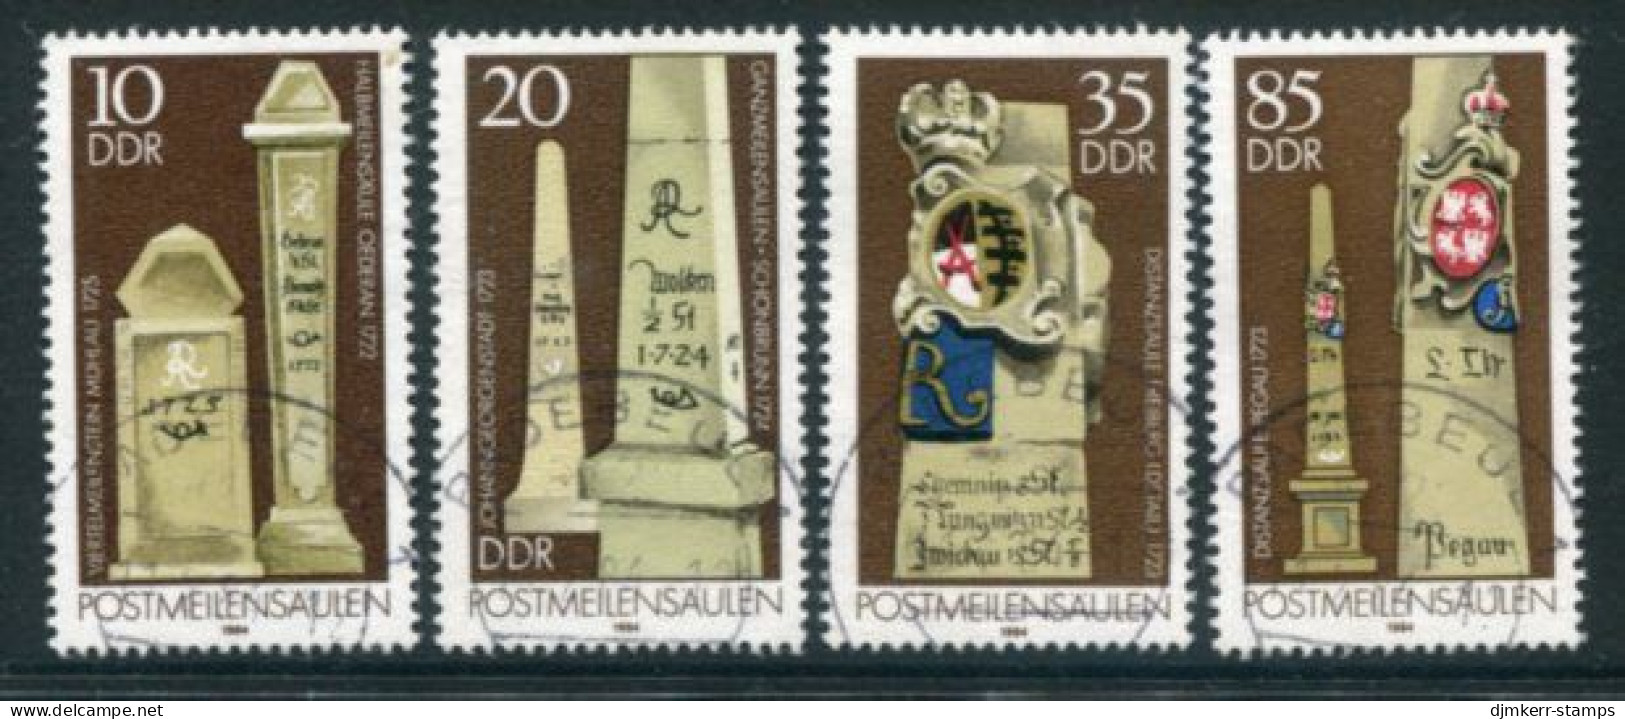 DDR 1984 Postal Milestones Used.  Michel 2853-56 - Used Stamps